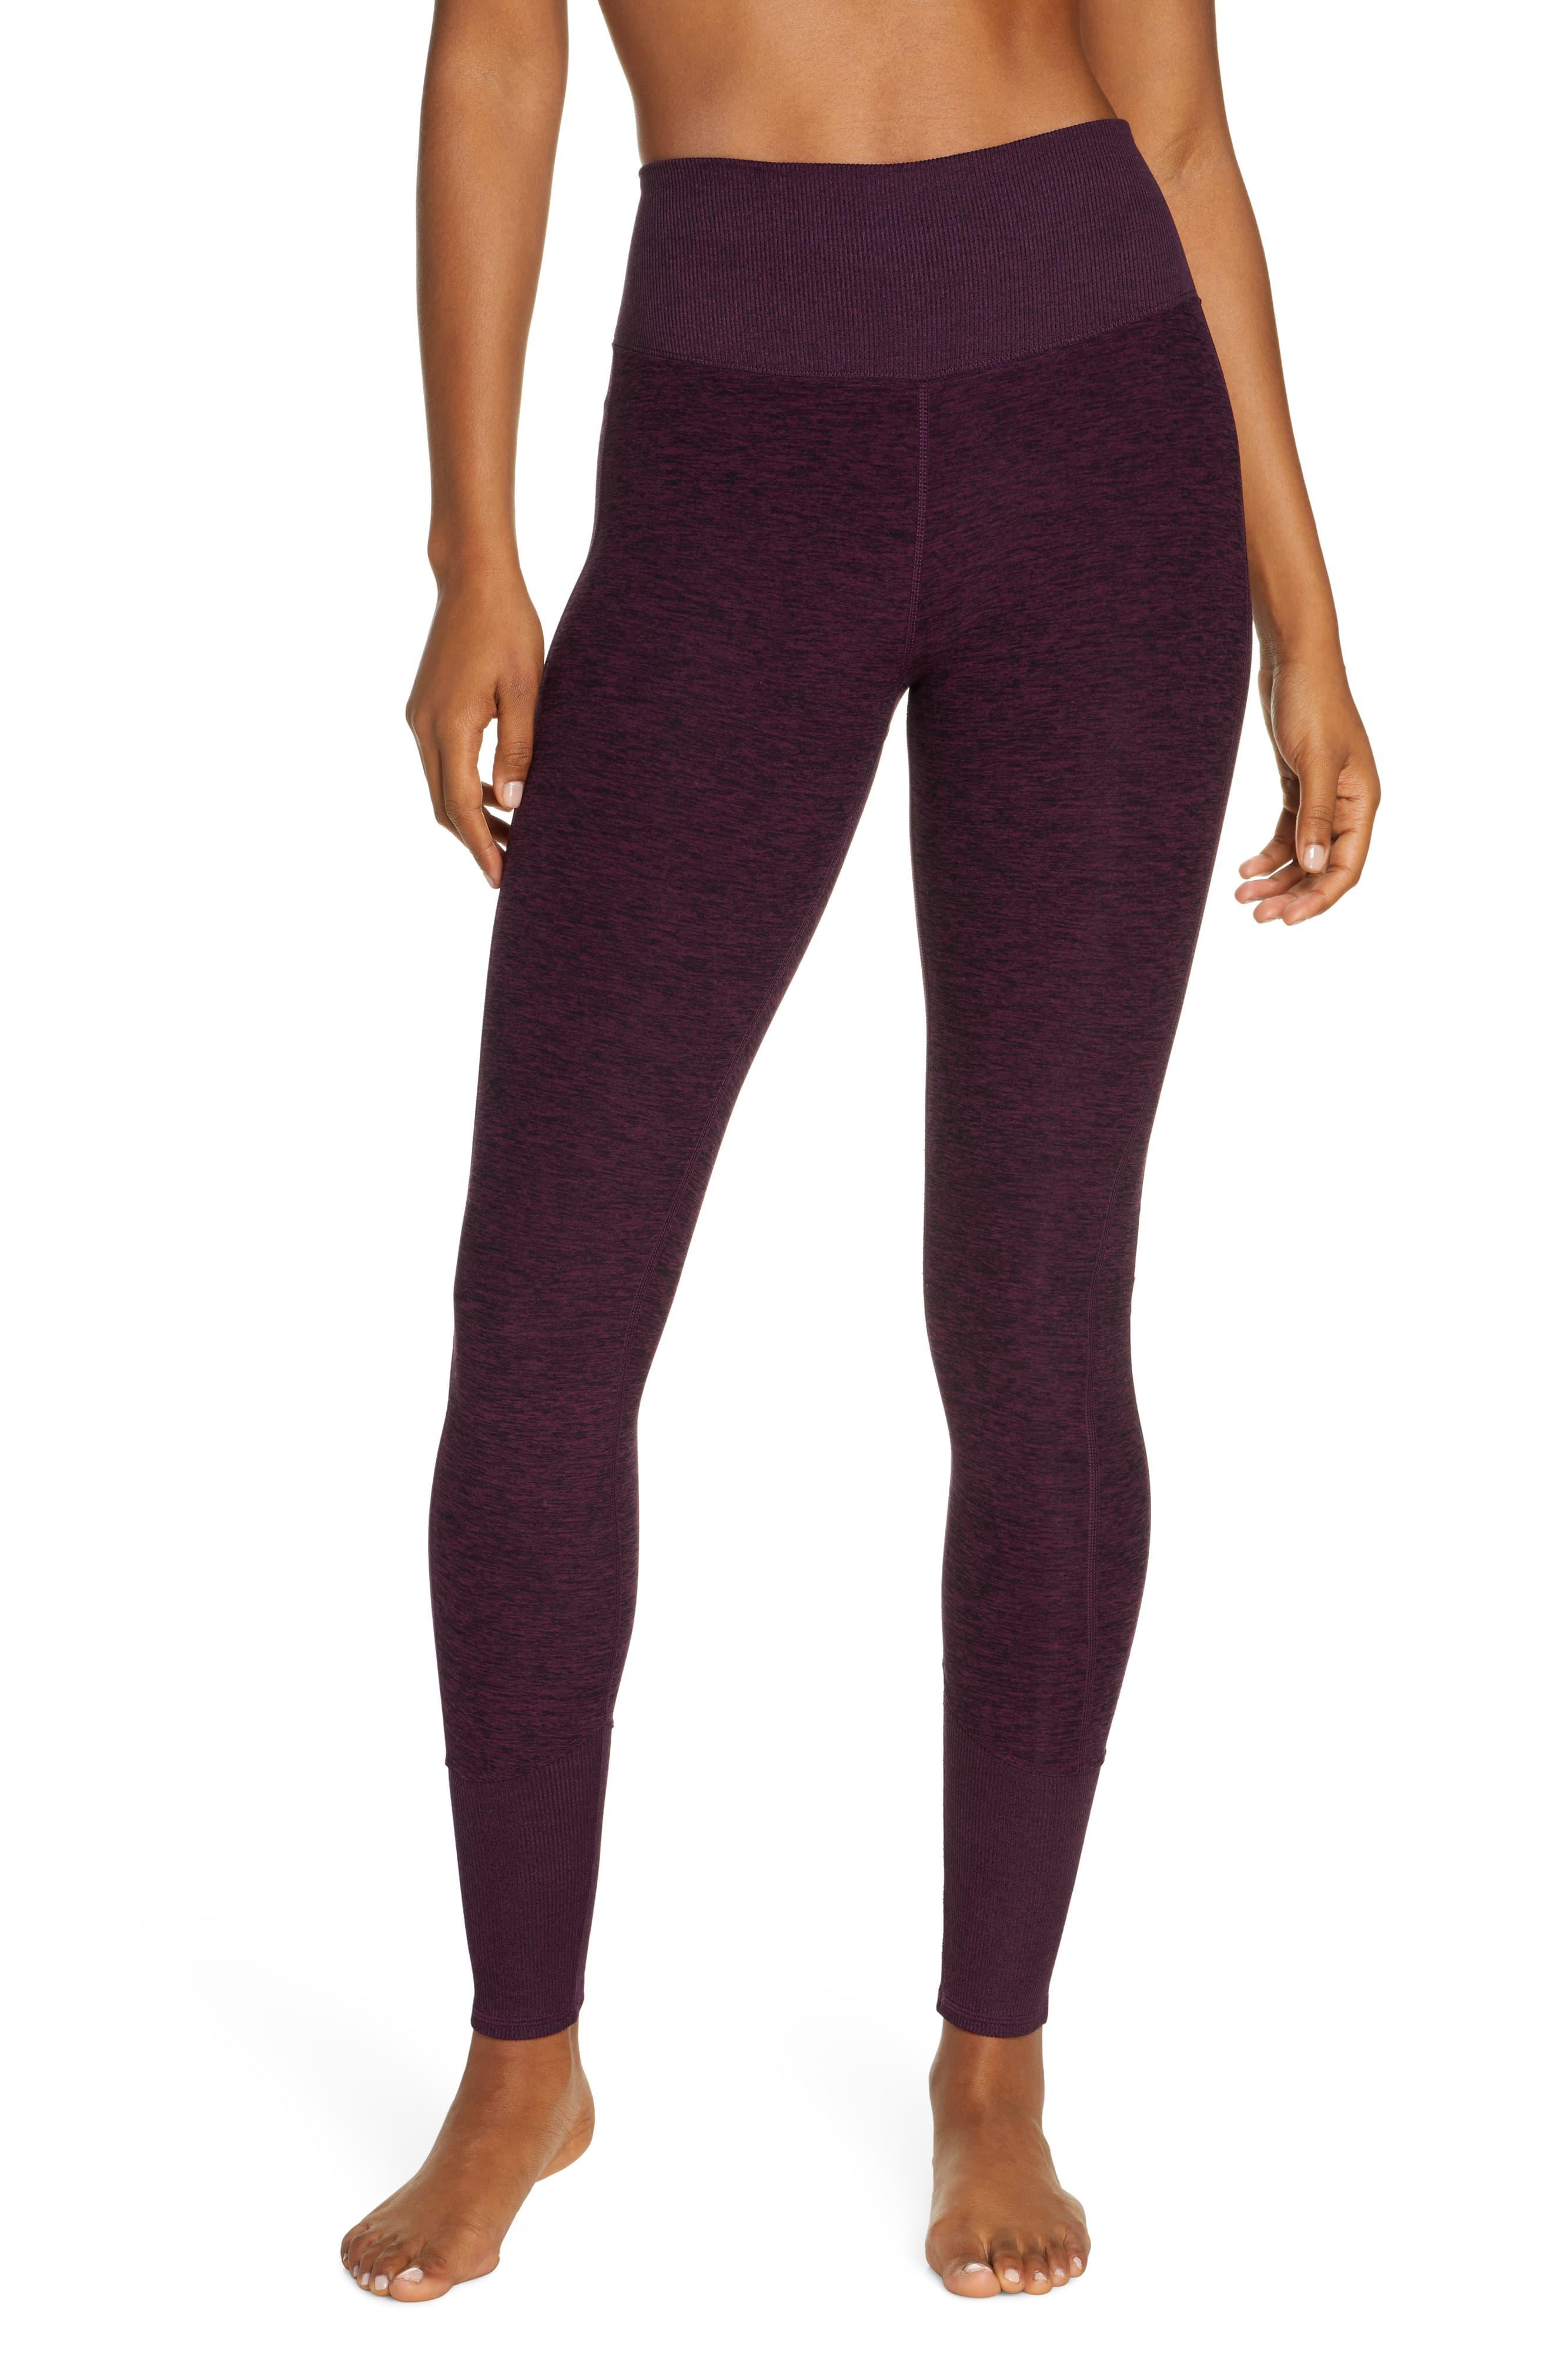 ALO Yoga High Waist Alosoft Lounge Leggings Lilac Purple Heather Size Medium